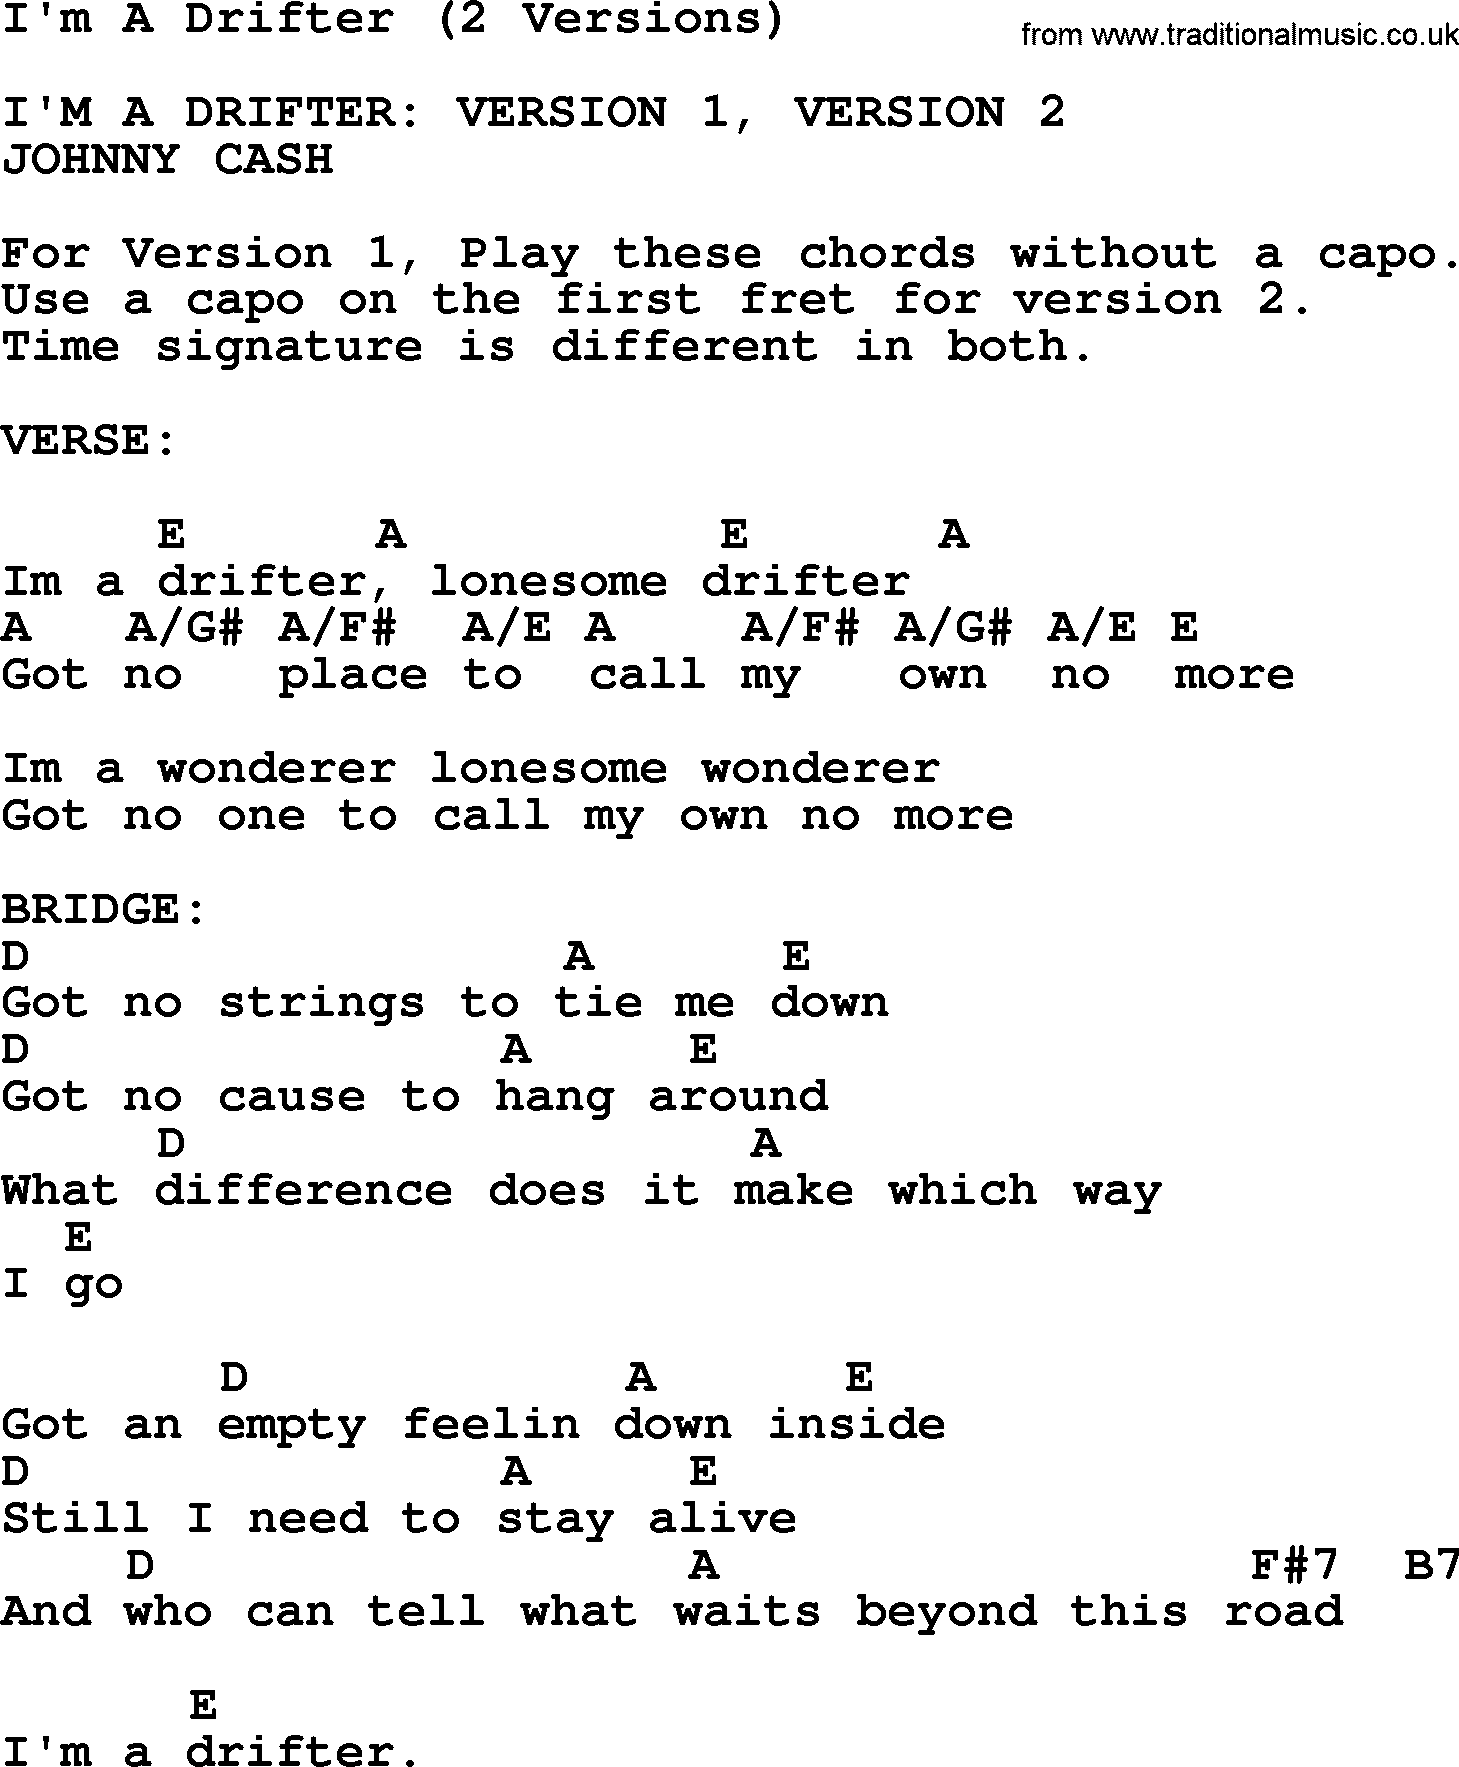 Johnny Cash song I'm A Drifter(2 Versions), lyrics and chords